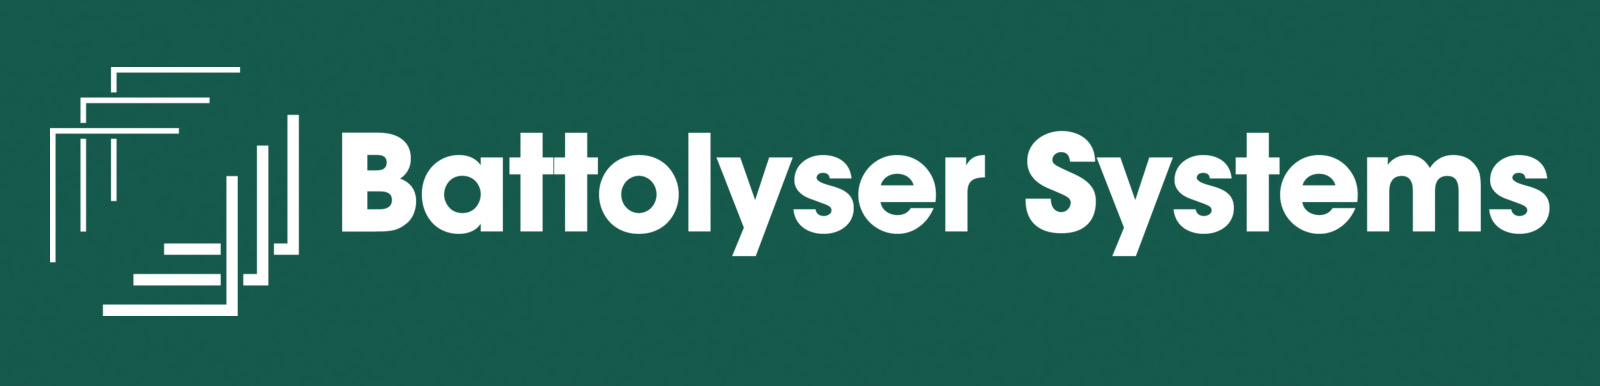 Battolyser-systems-logo